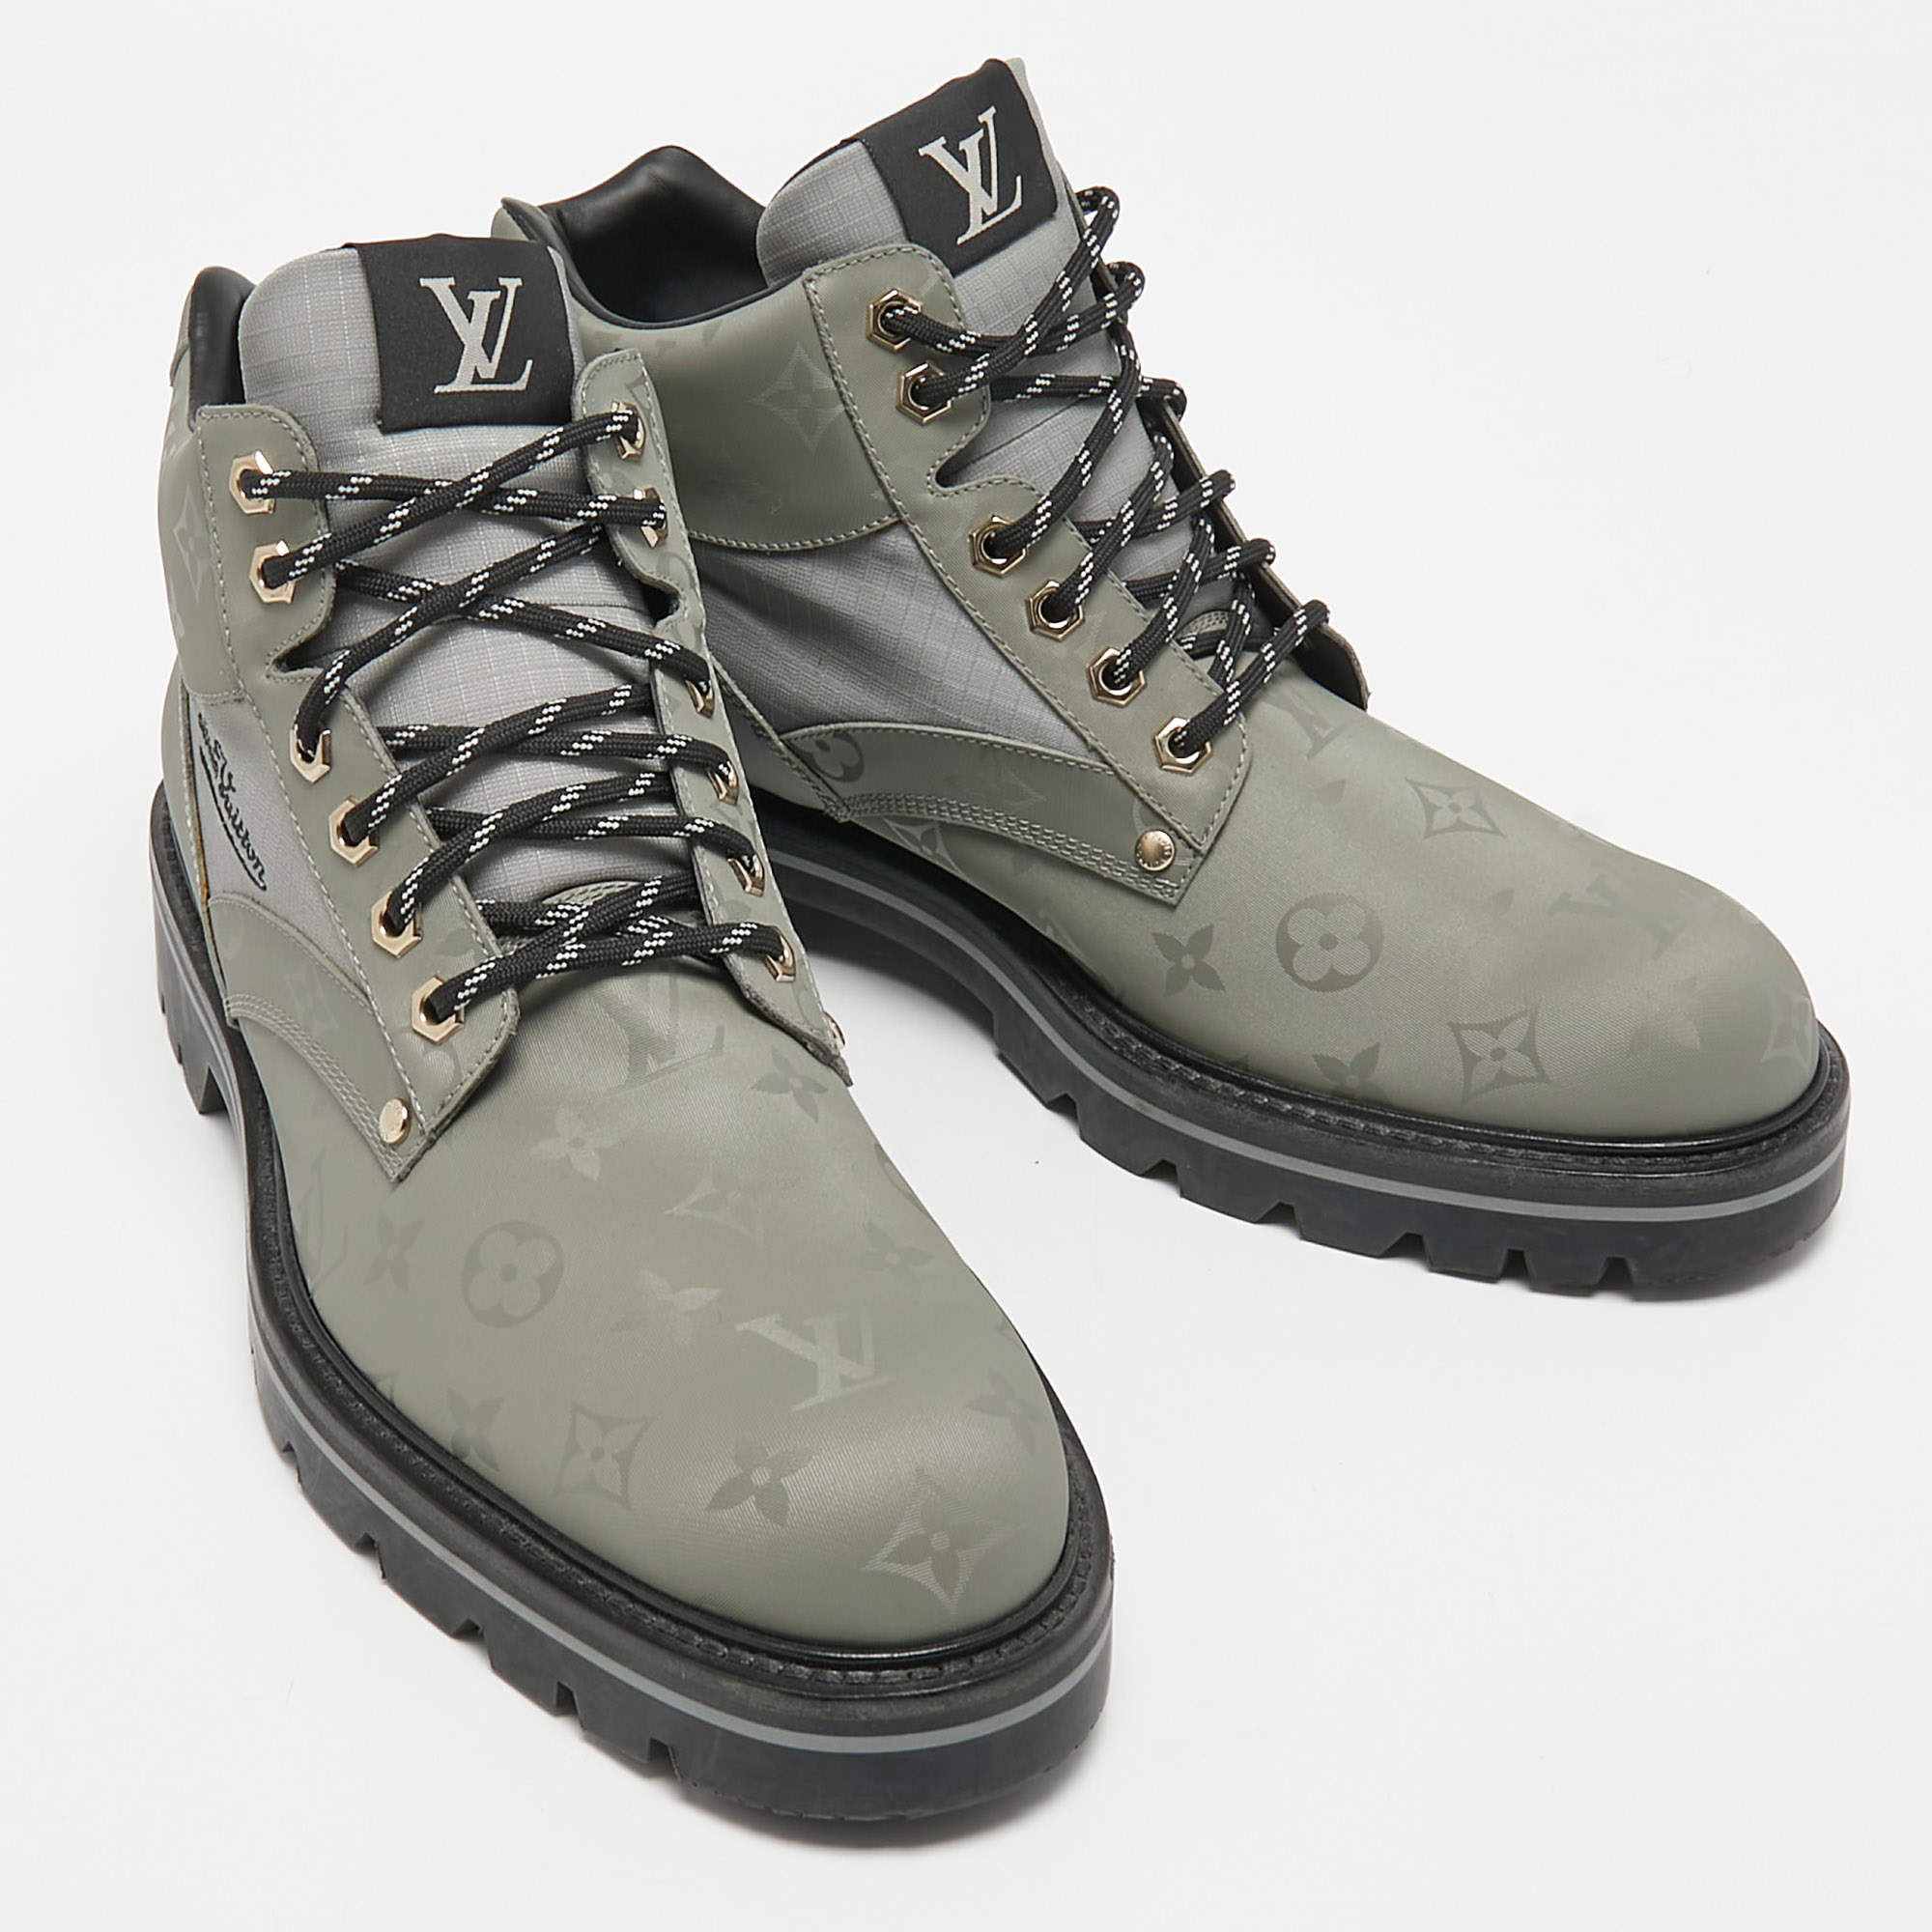 Oberkampf leather boots Louis Vuitton Black size 44 EU in Leather